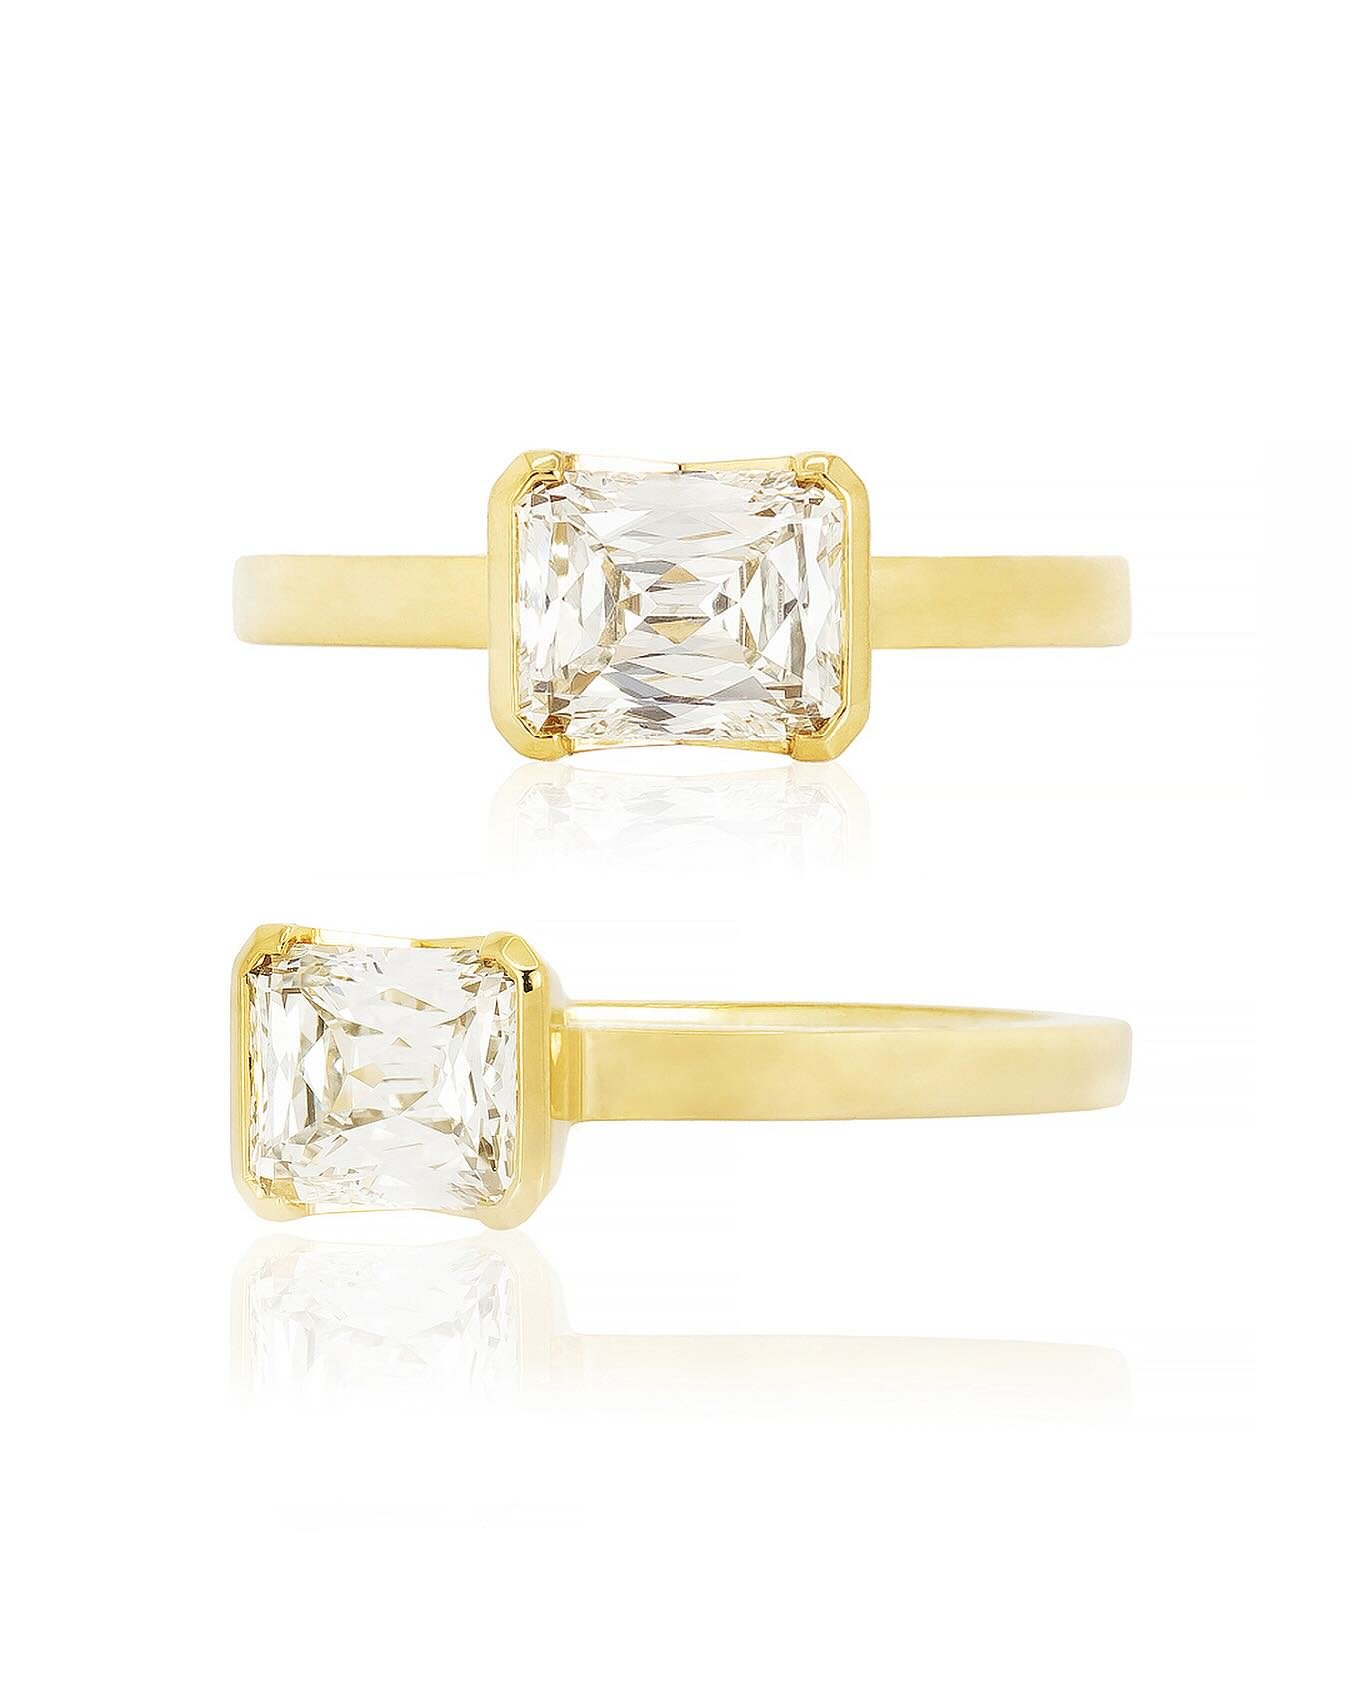 Diamond Ring

Diamond: 1.39ct - SI1 - I - GIA Certification
18kt Yellow Gold
$12,000

Big Island Jewelers
Fine Jewelry - Made by Hand
#madeinhawaii